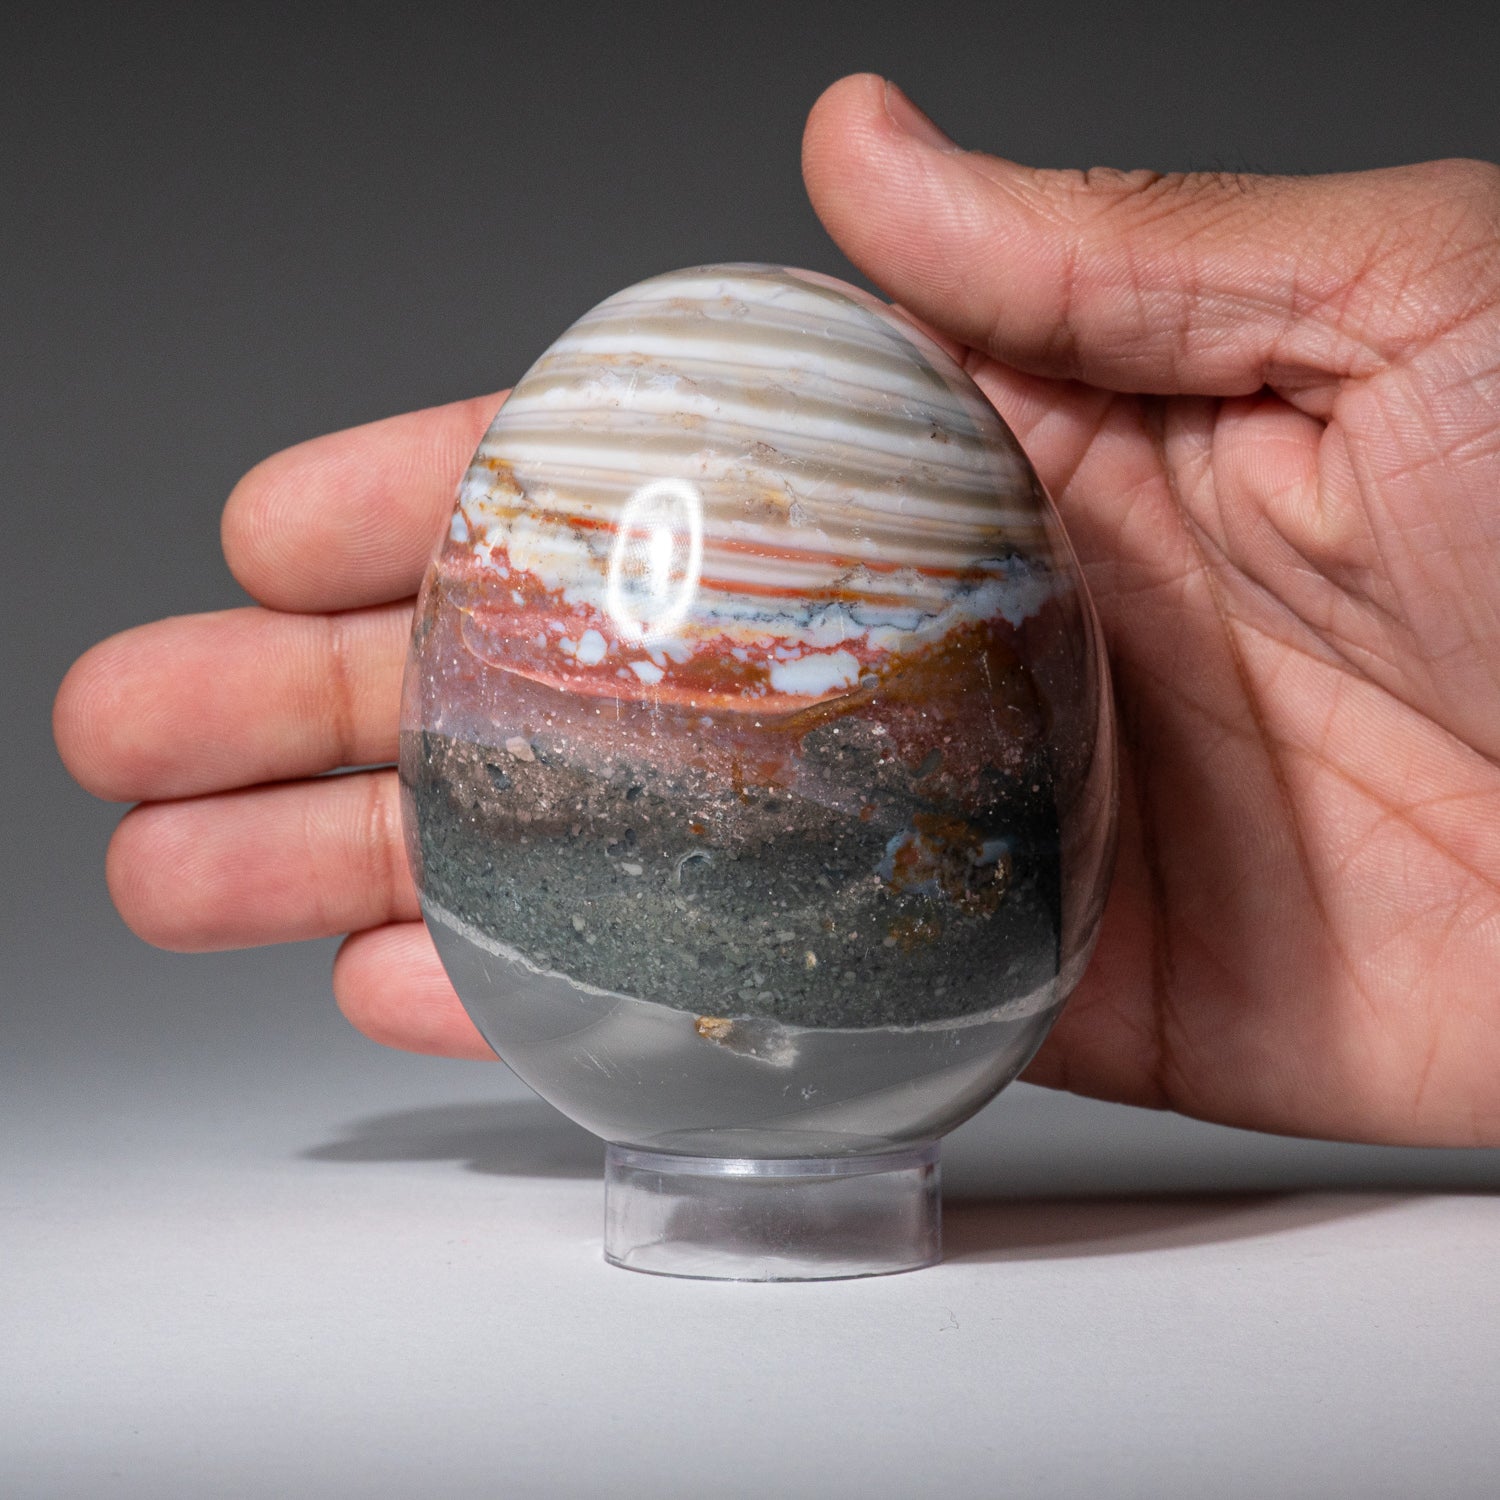 Genuine Polished Polychrome Egg from Madagascar (535.7 grams)